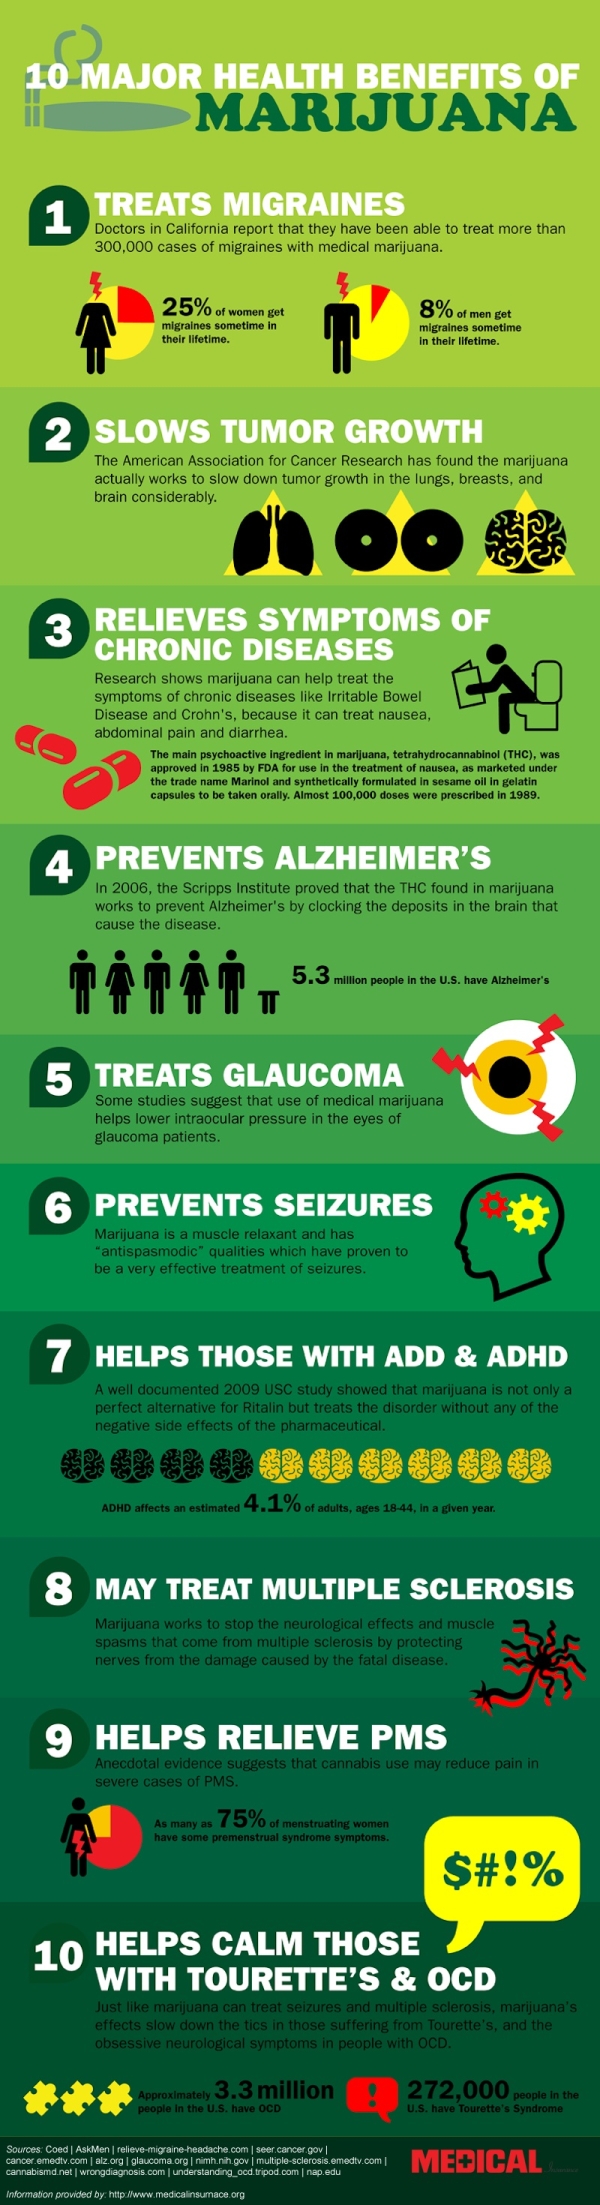 10-major-health-benefits-marijuana.jpg